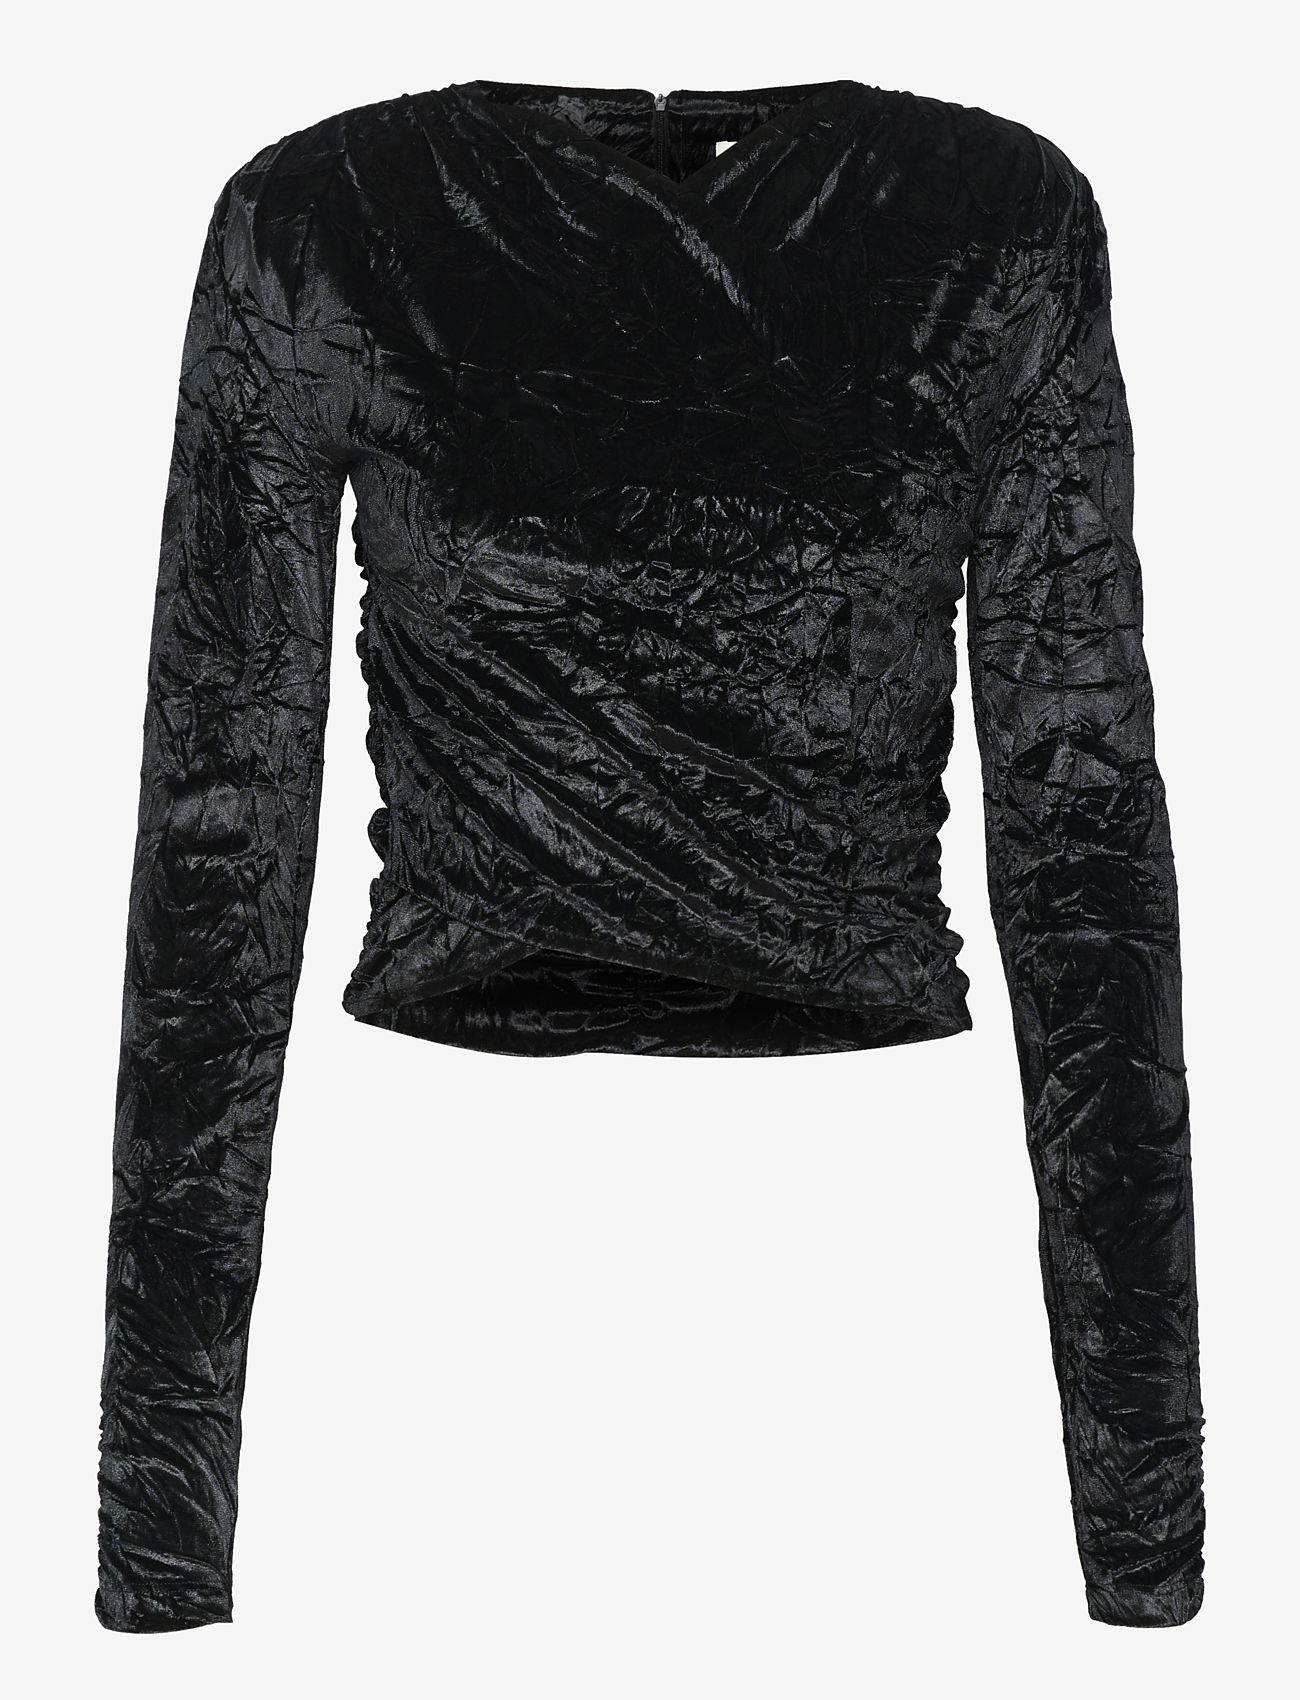 Gestuz - VikaGZ blouse - langärmlige blusen - black - 0